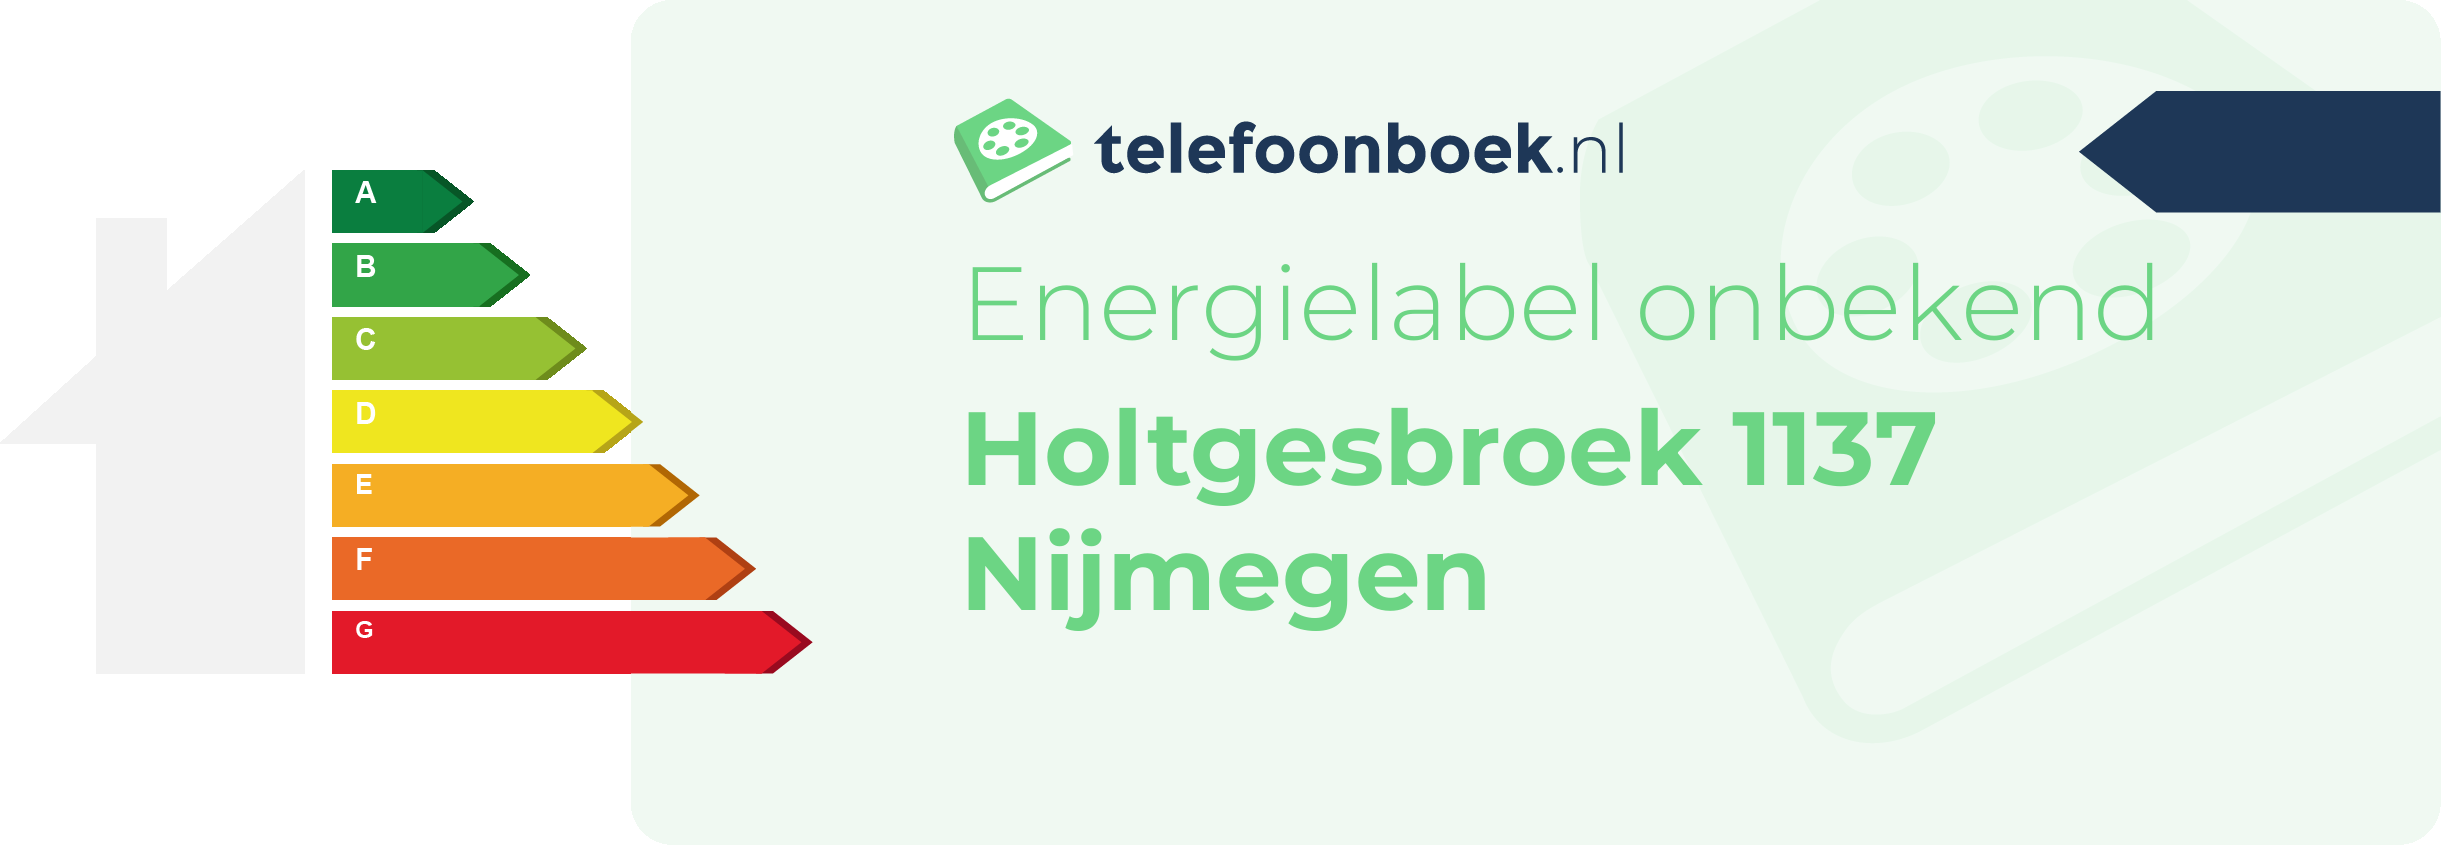 Energielabel Holtgesbroek 1137 Nijmegen